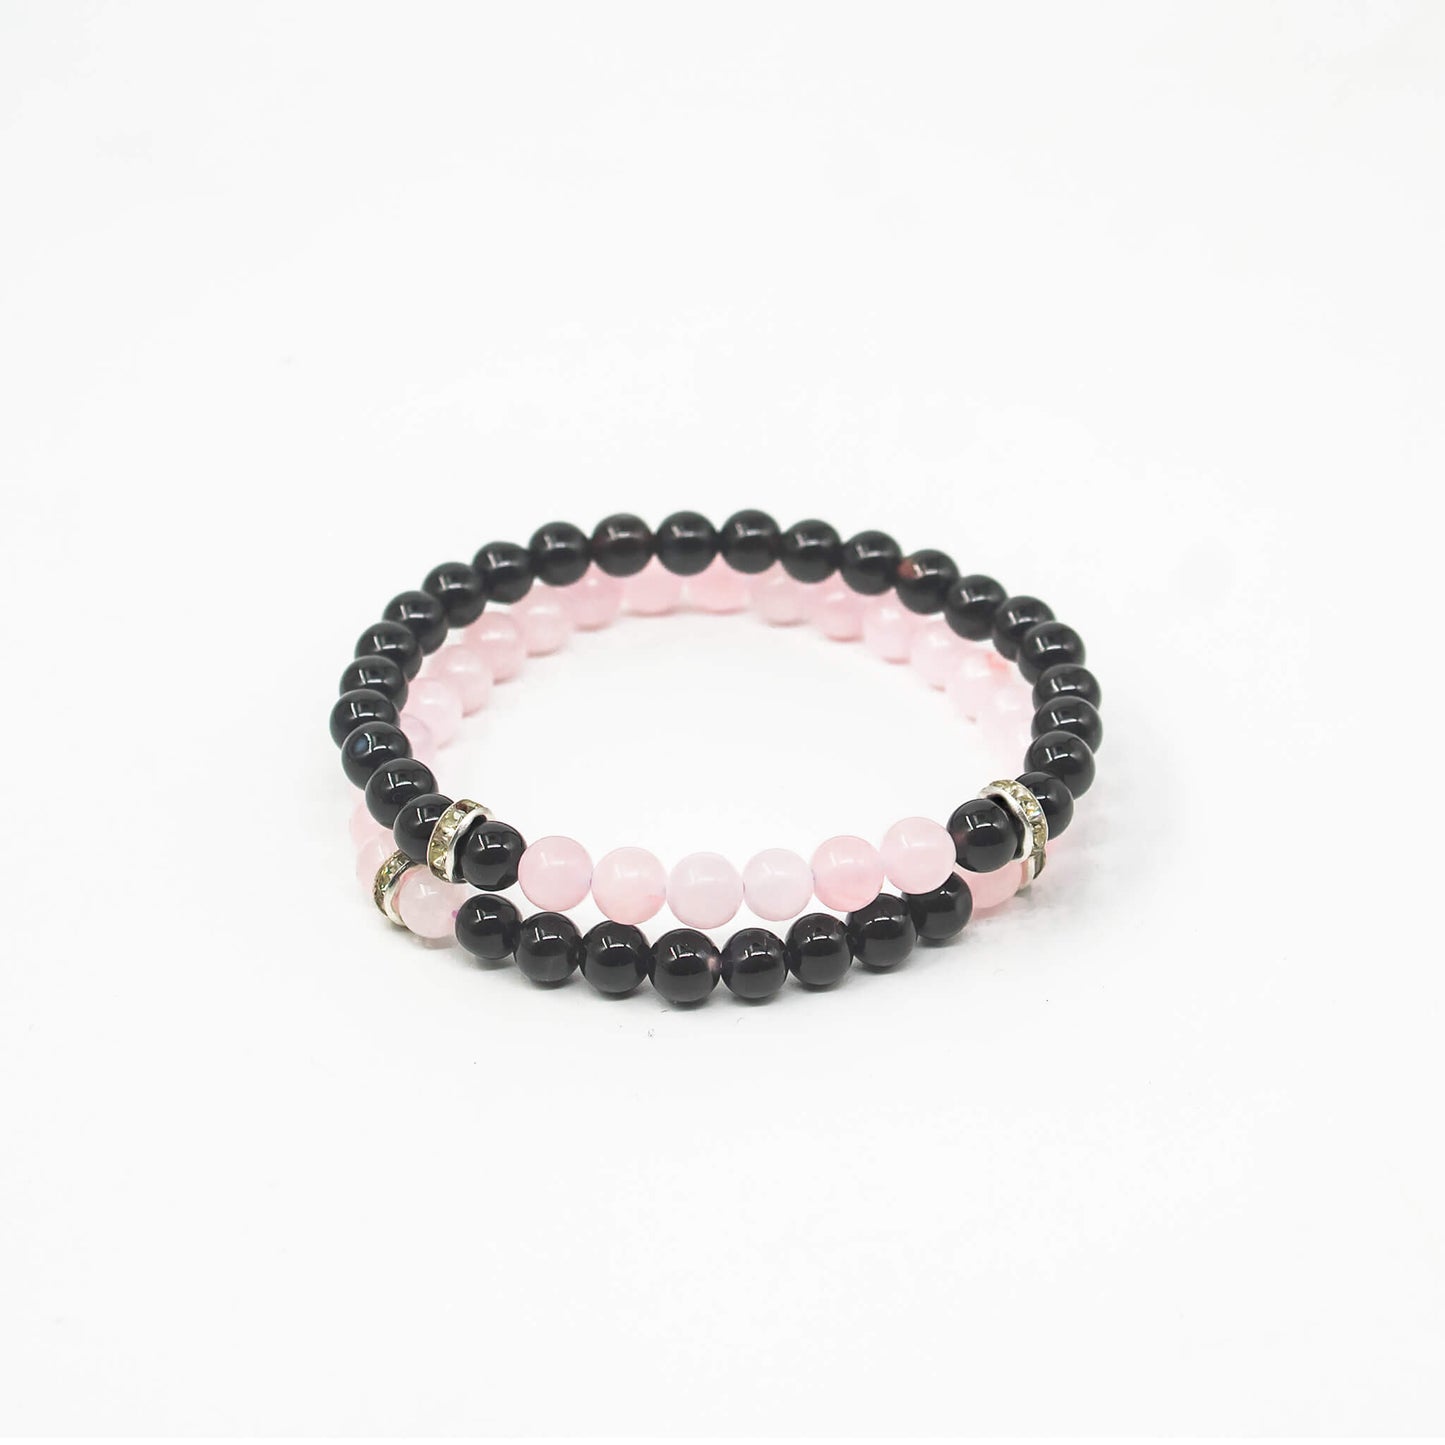 Rose Quartz And Black Tourmaline Matching Bracelets with 6 mm beads